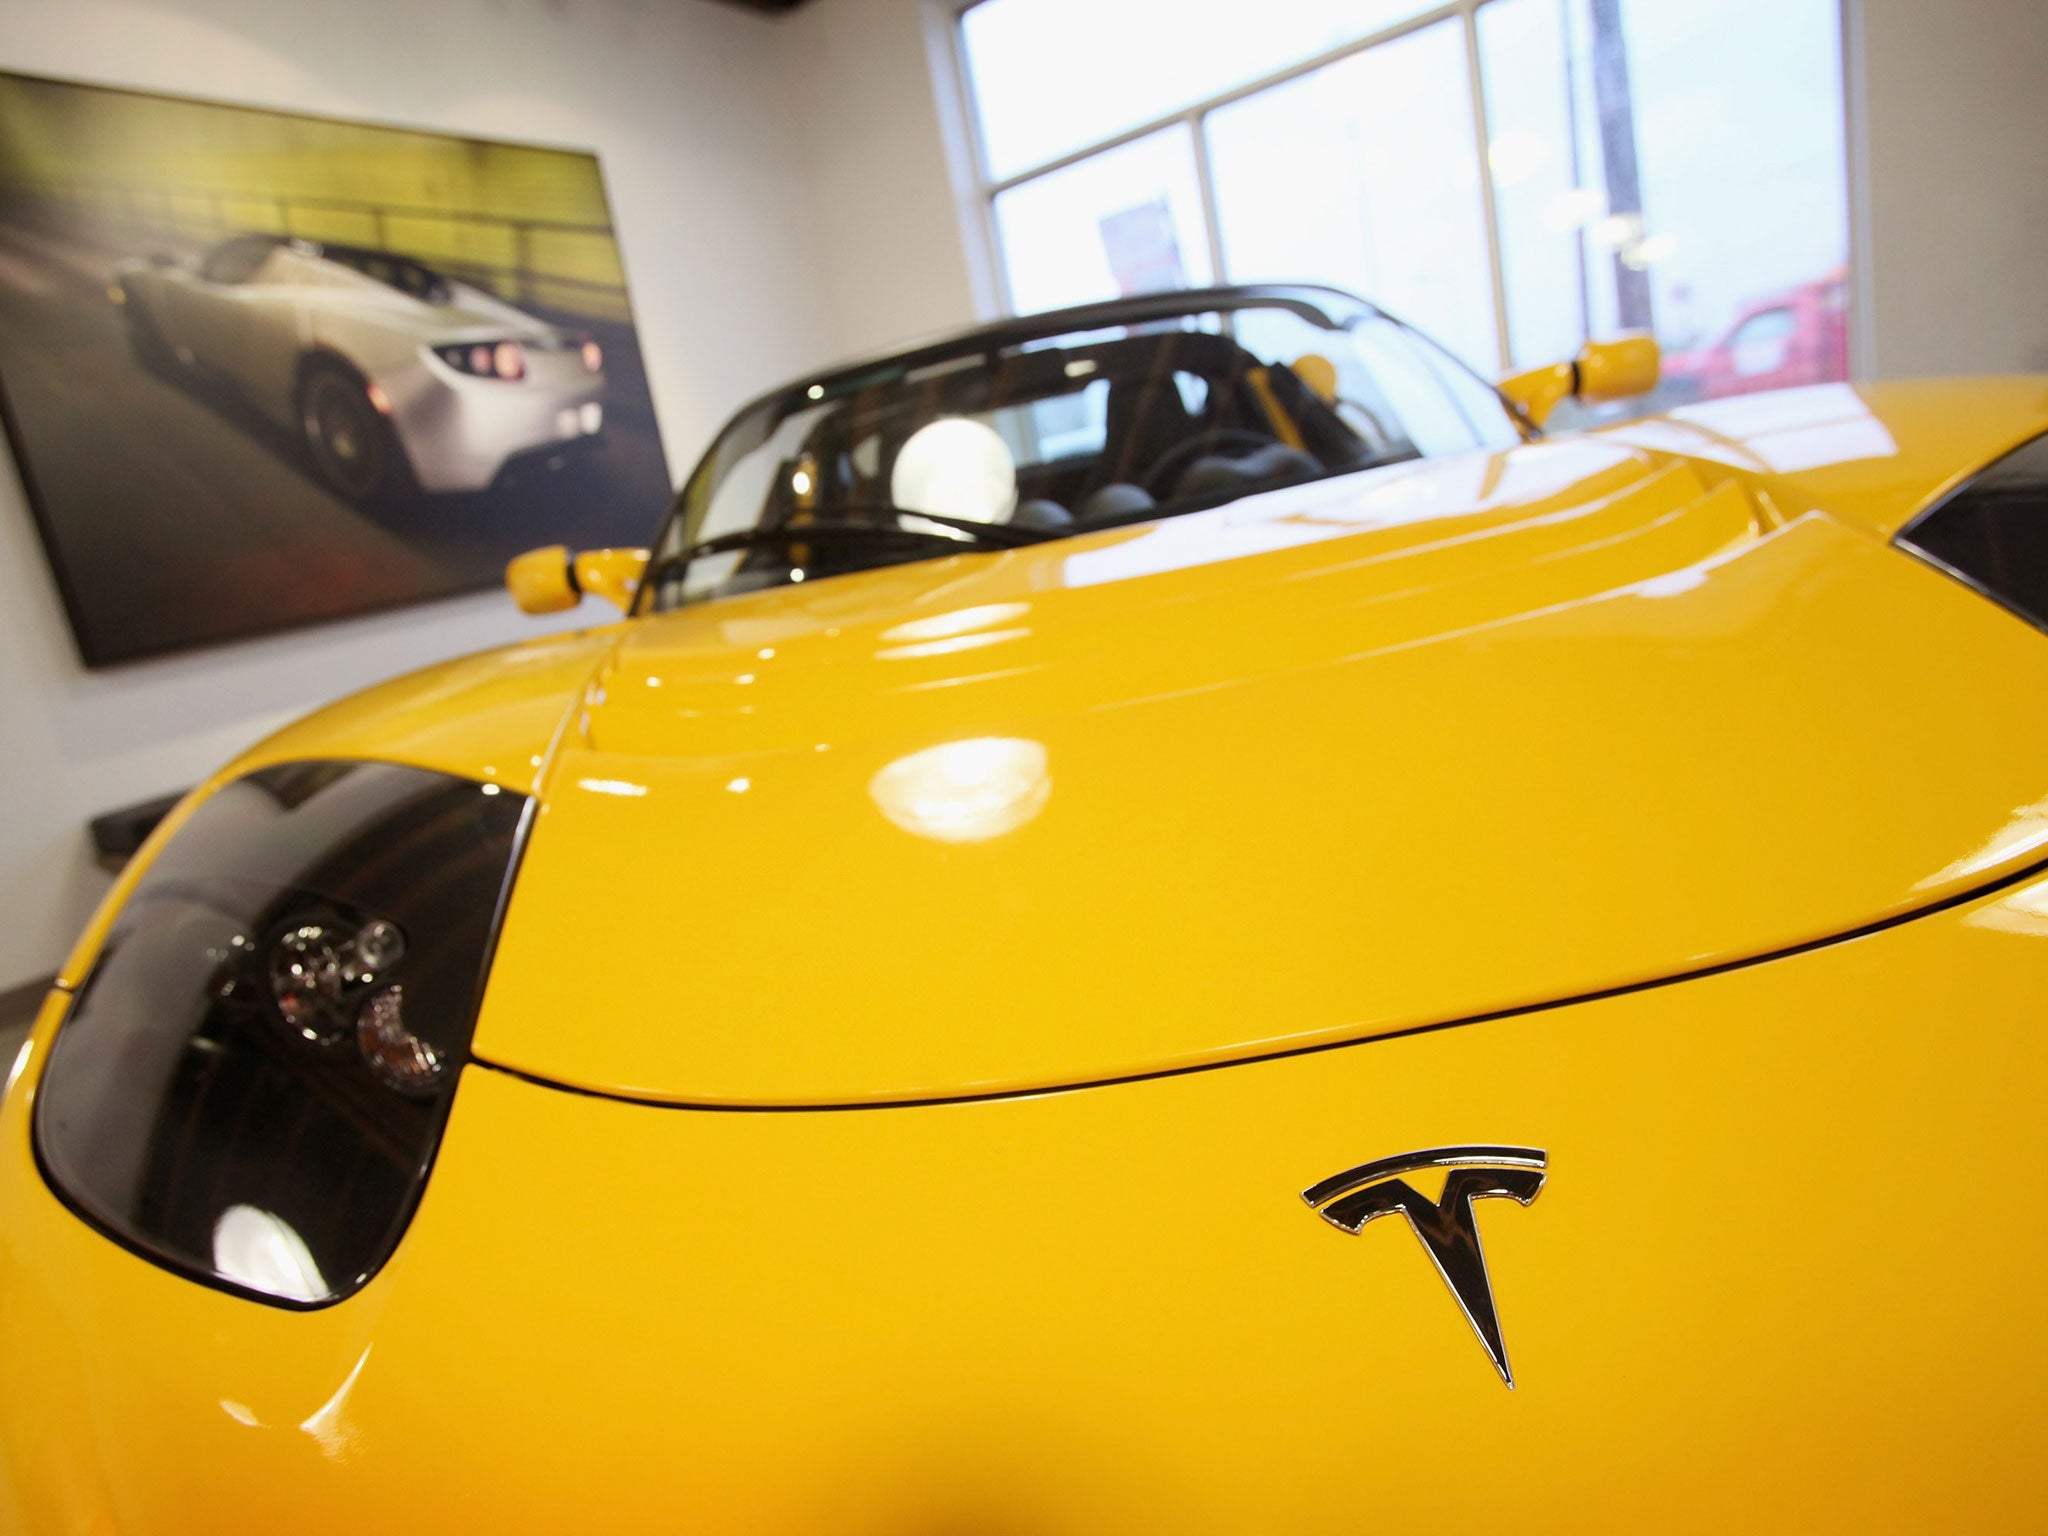 Tesla's roadster, in a dealership